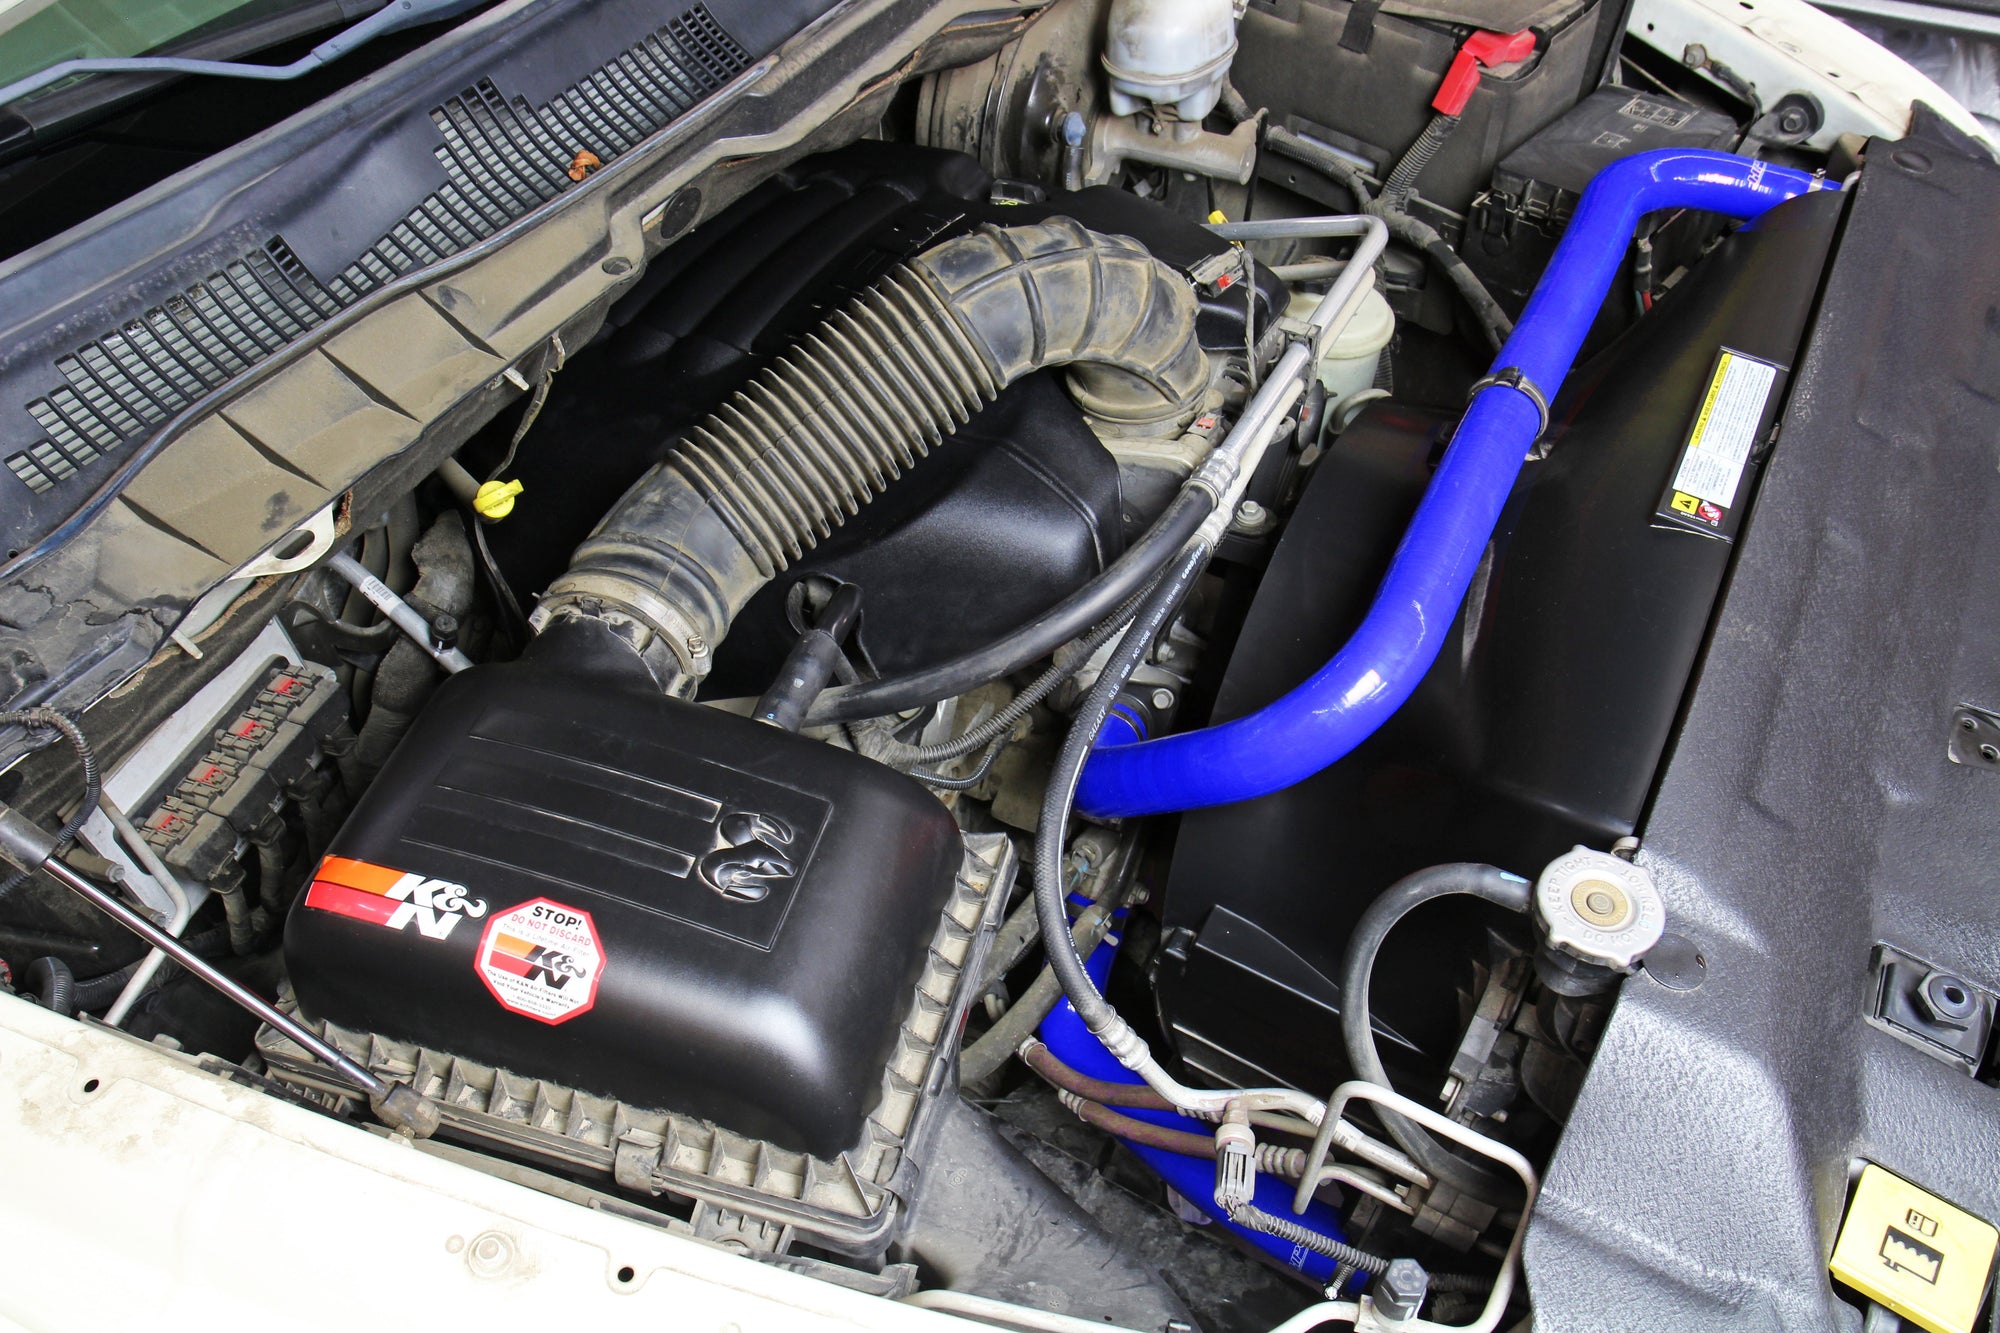 HPS Blue Silicone Radiator Hose Kit replace Dodge 2009-2019 Ram 1500 Pickup 5.7L V8 OEM upper and lower coolant hoses